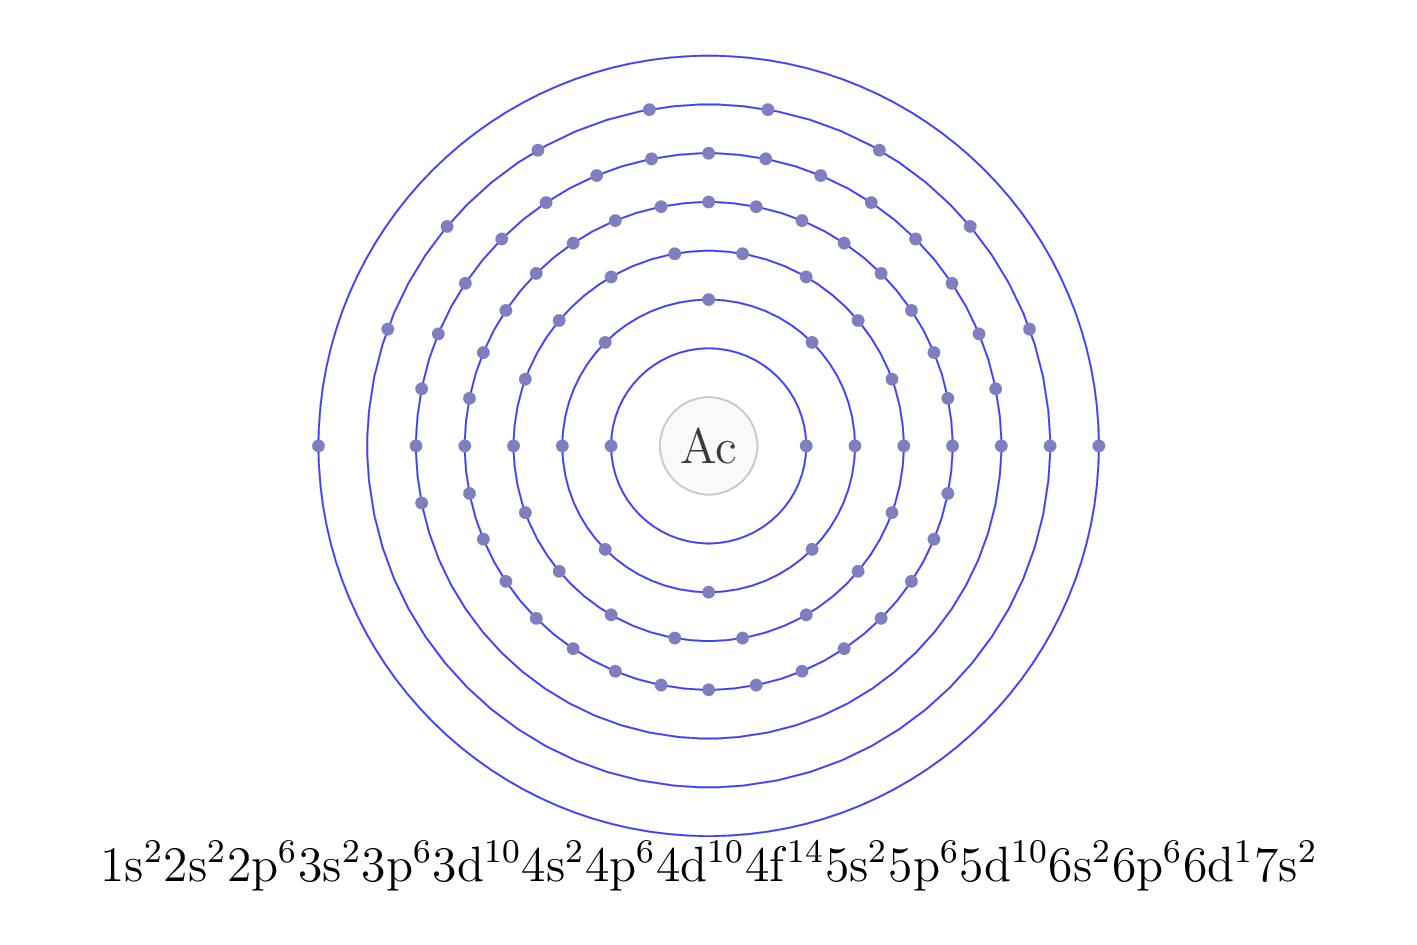 electron configuration of element Ac